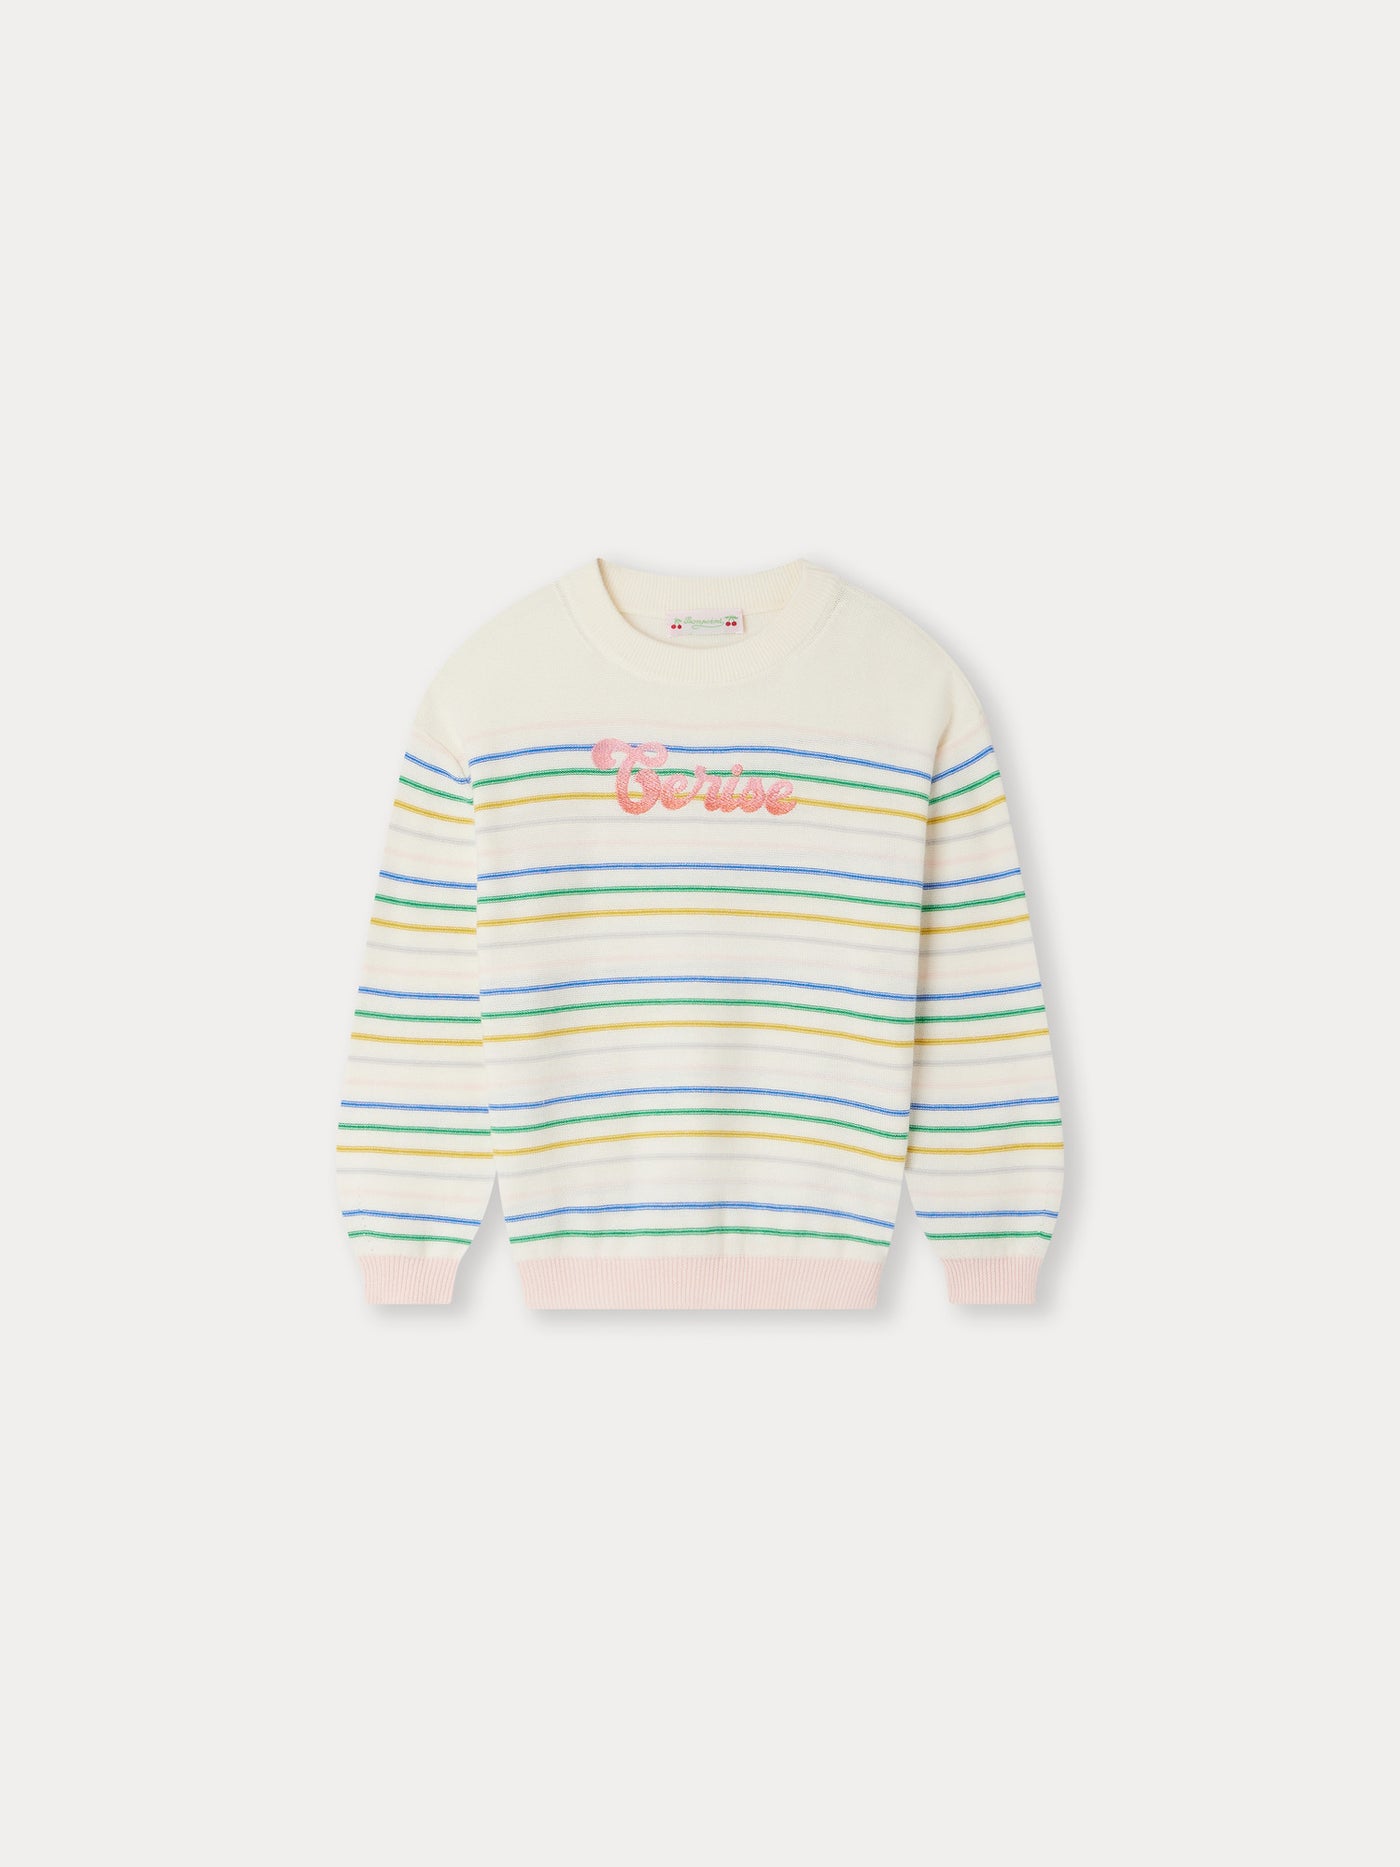 Anumati Sweater multicolored stripes